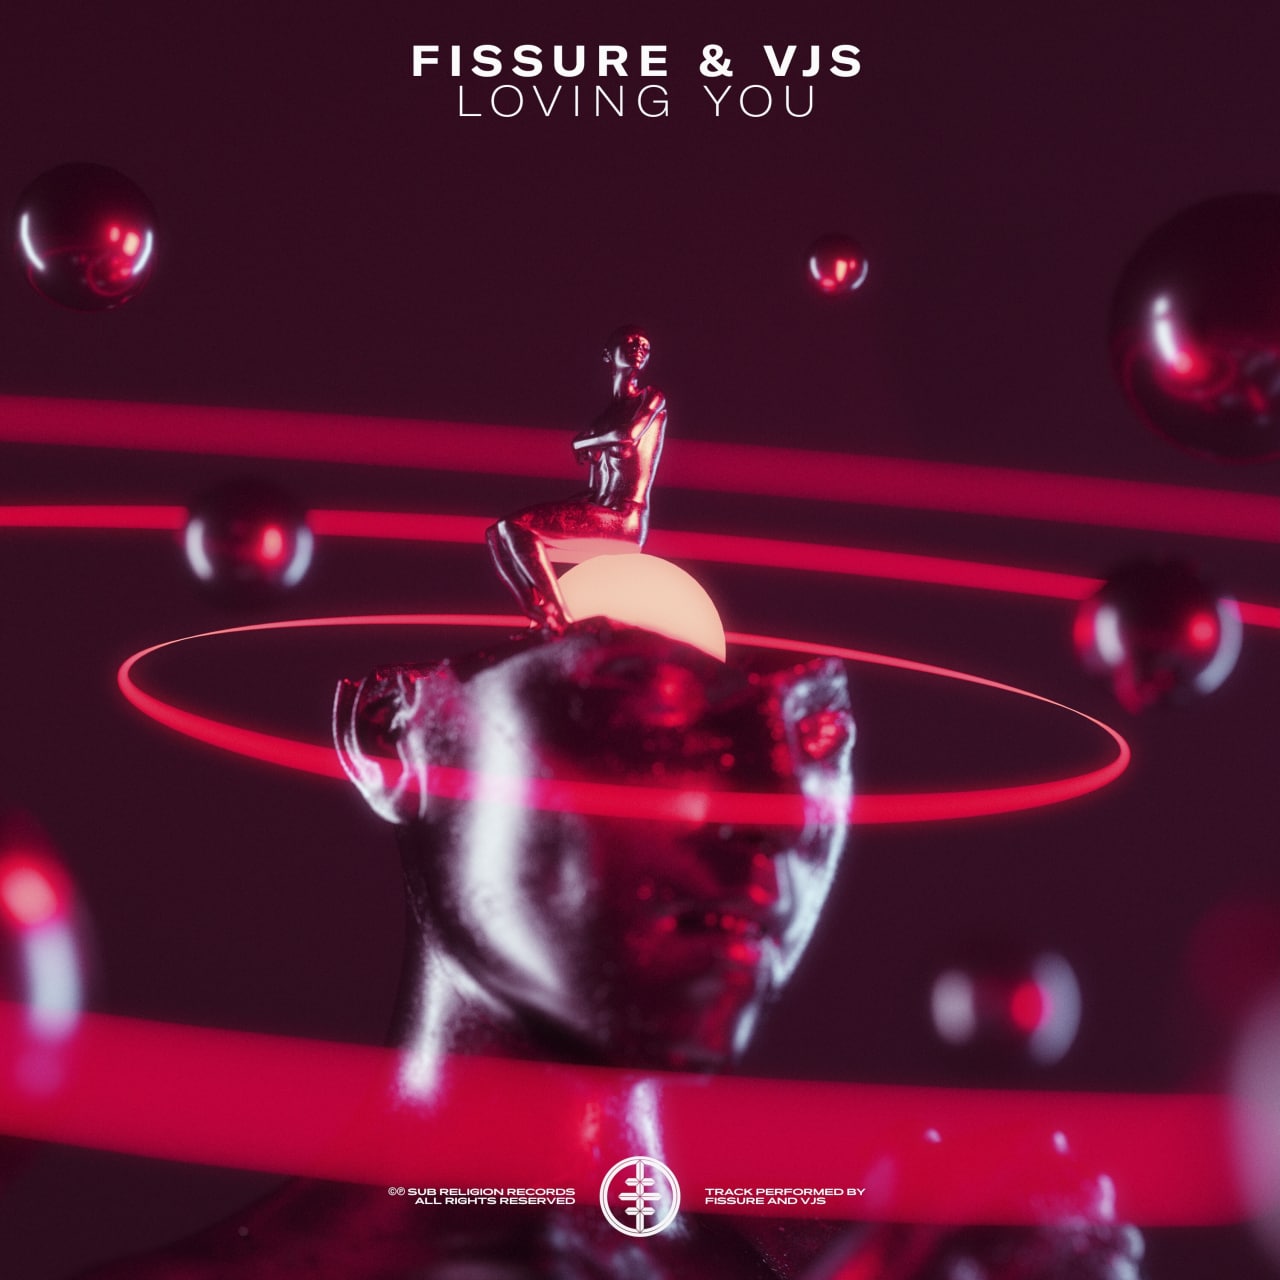 Fissure & VJS - Loving You (Club Mix)